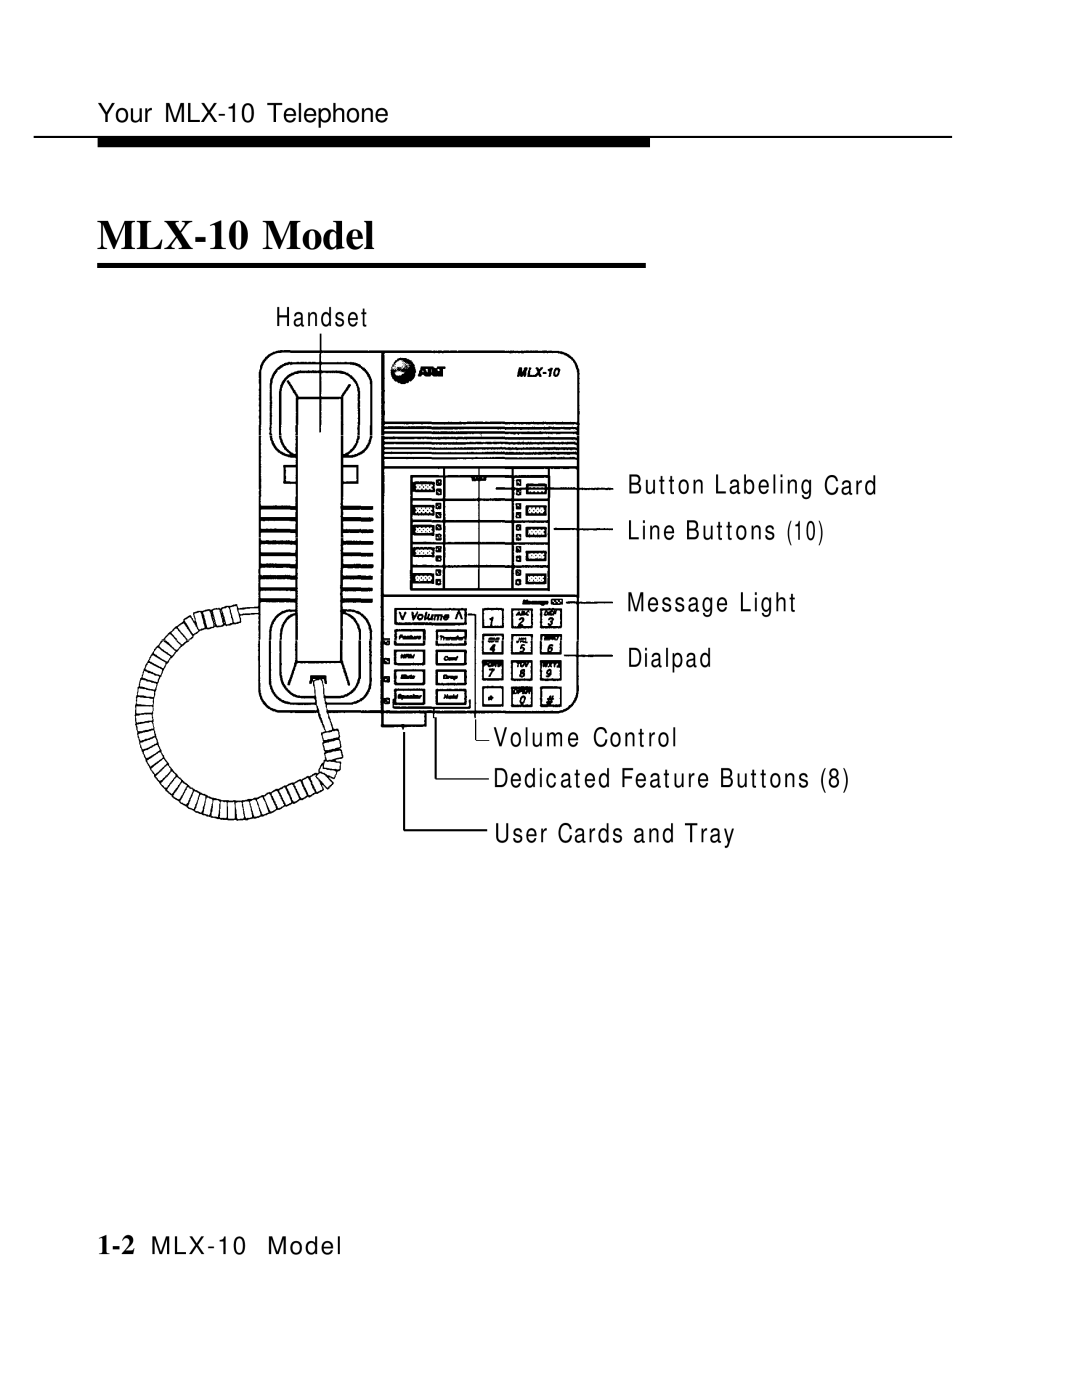 AT&T manual MLX-10 Model 